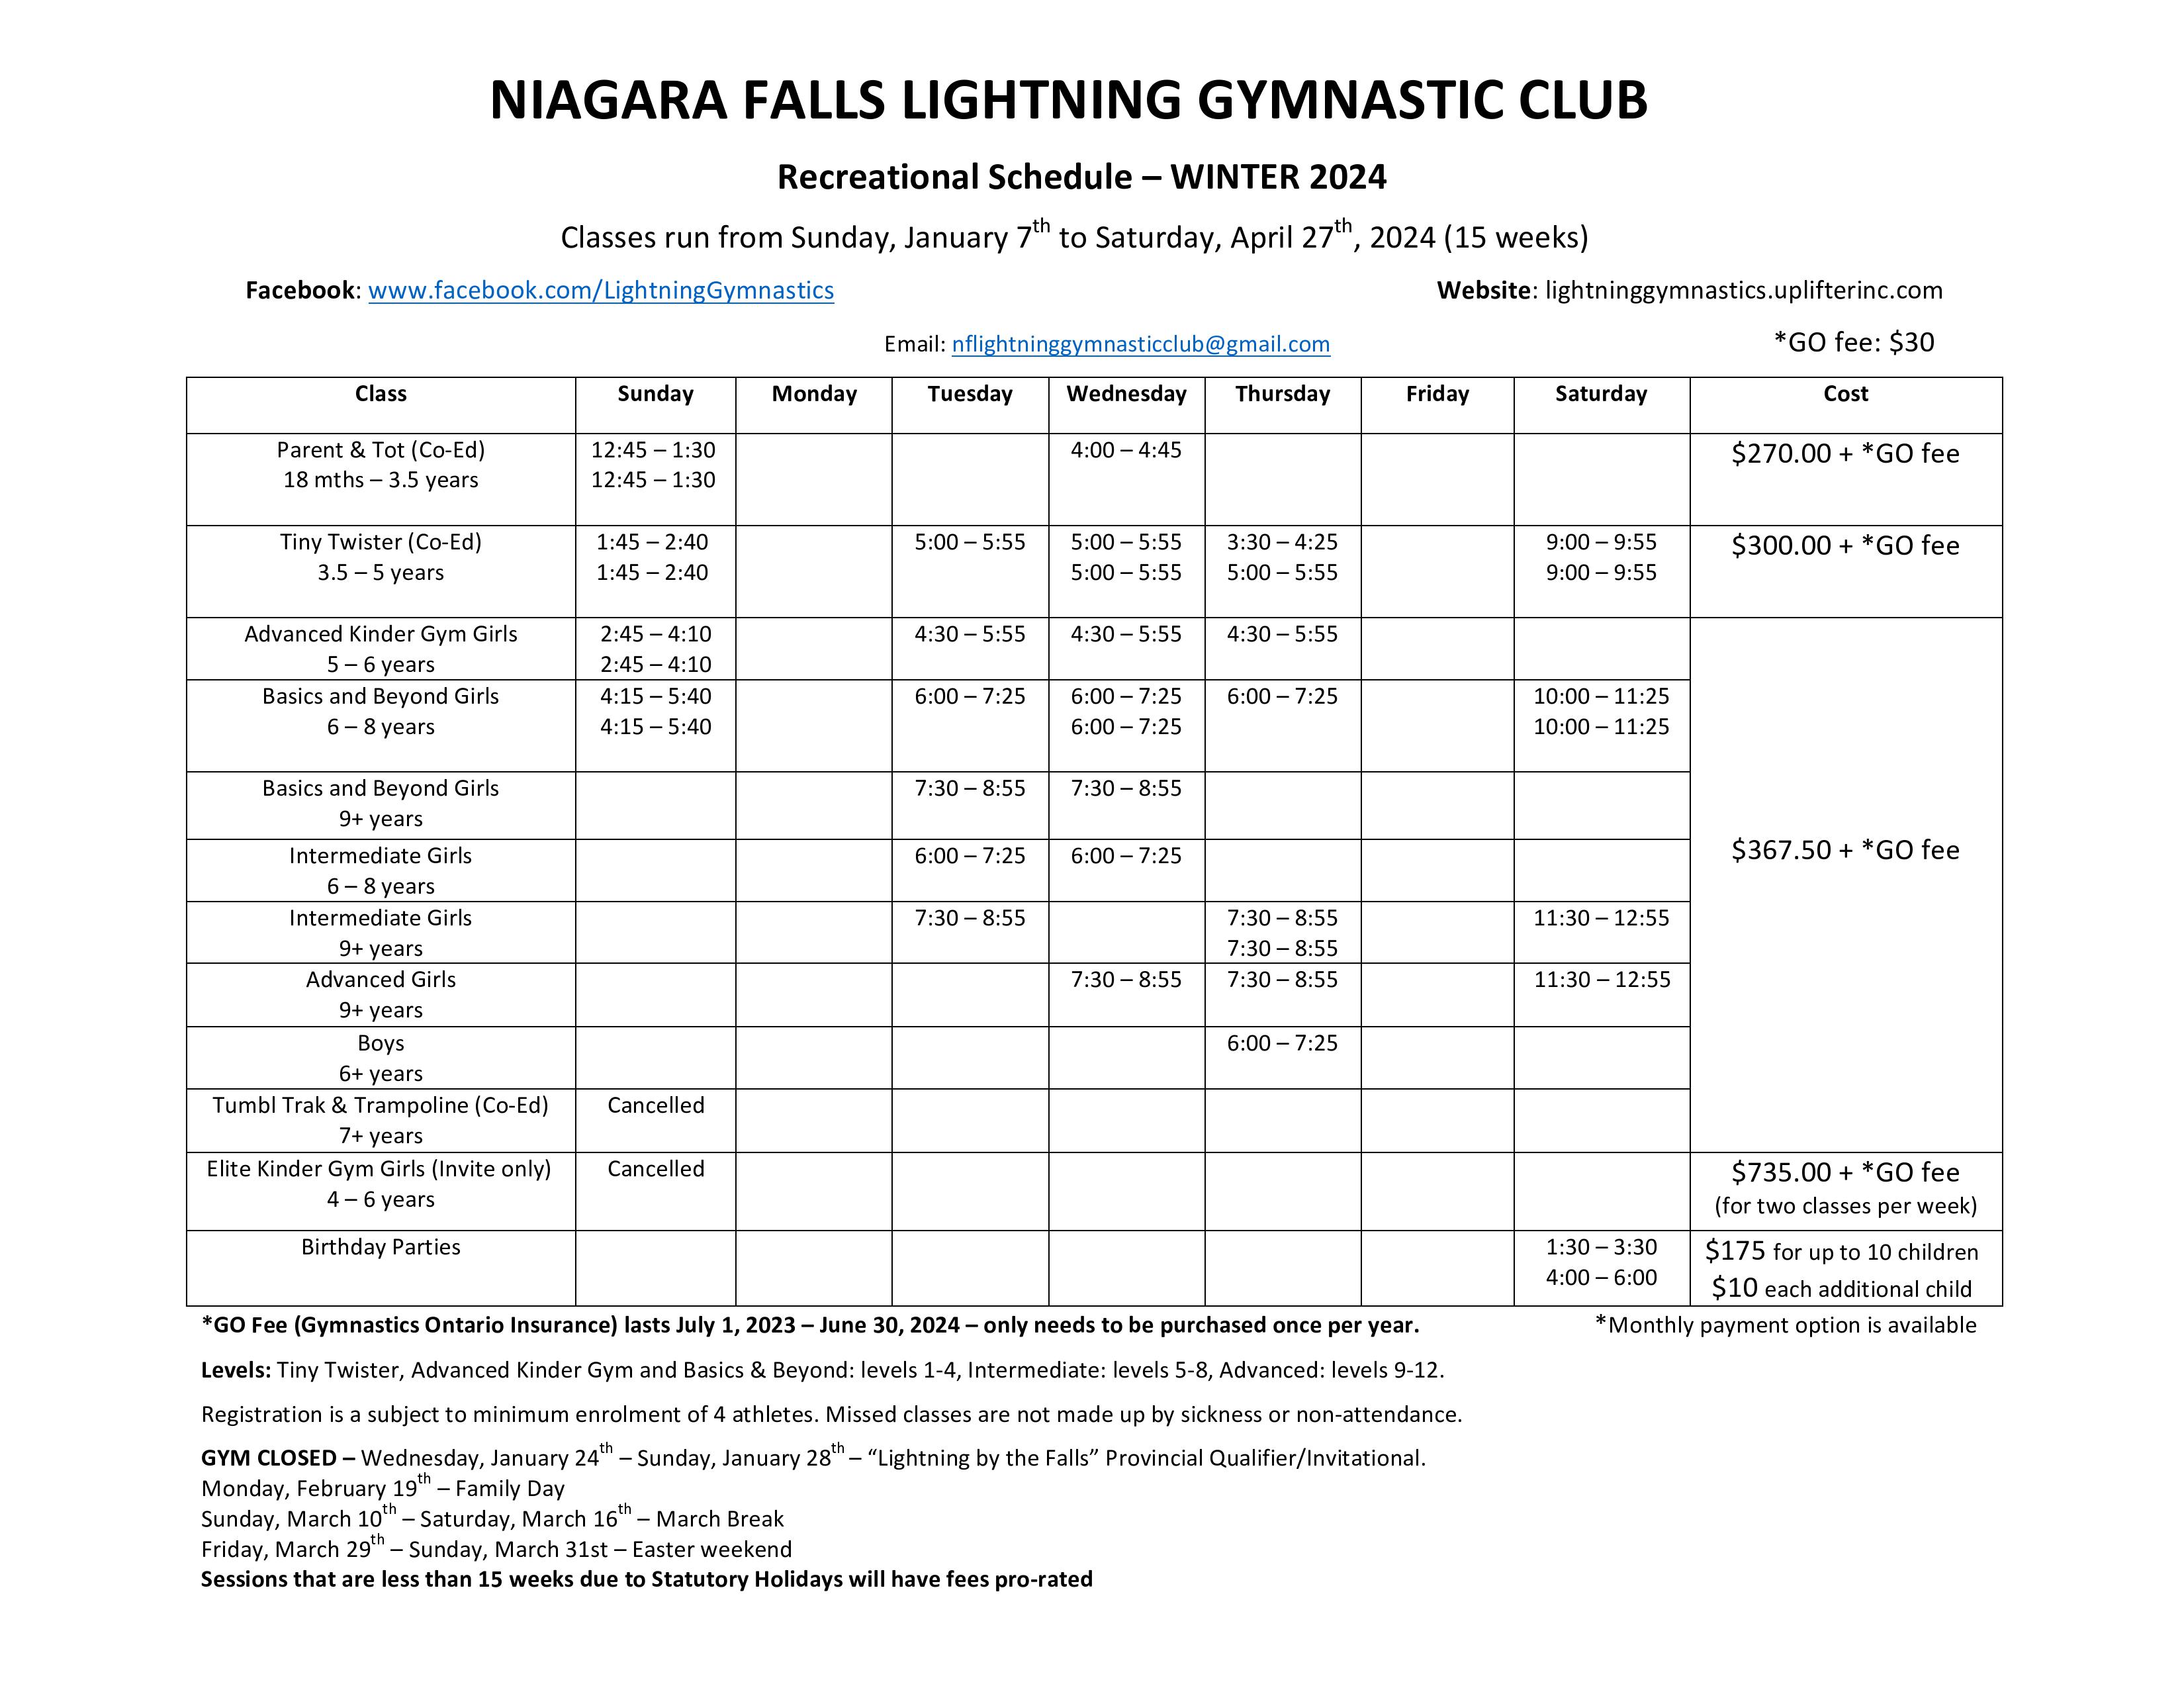 Winter Recreational Schedule 2024 and Registration Niagara Falls